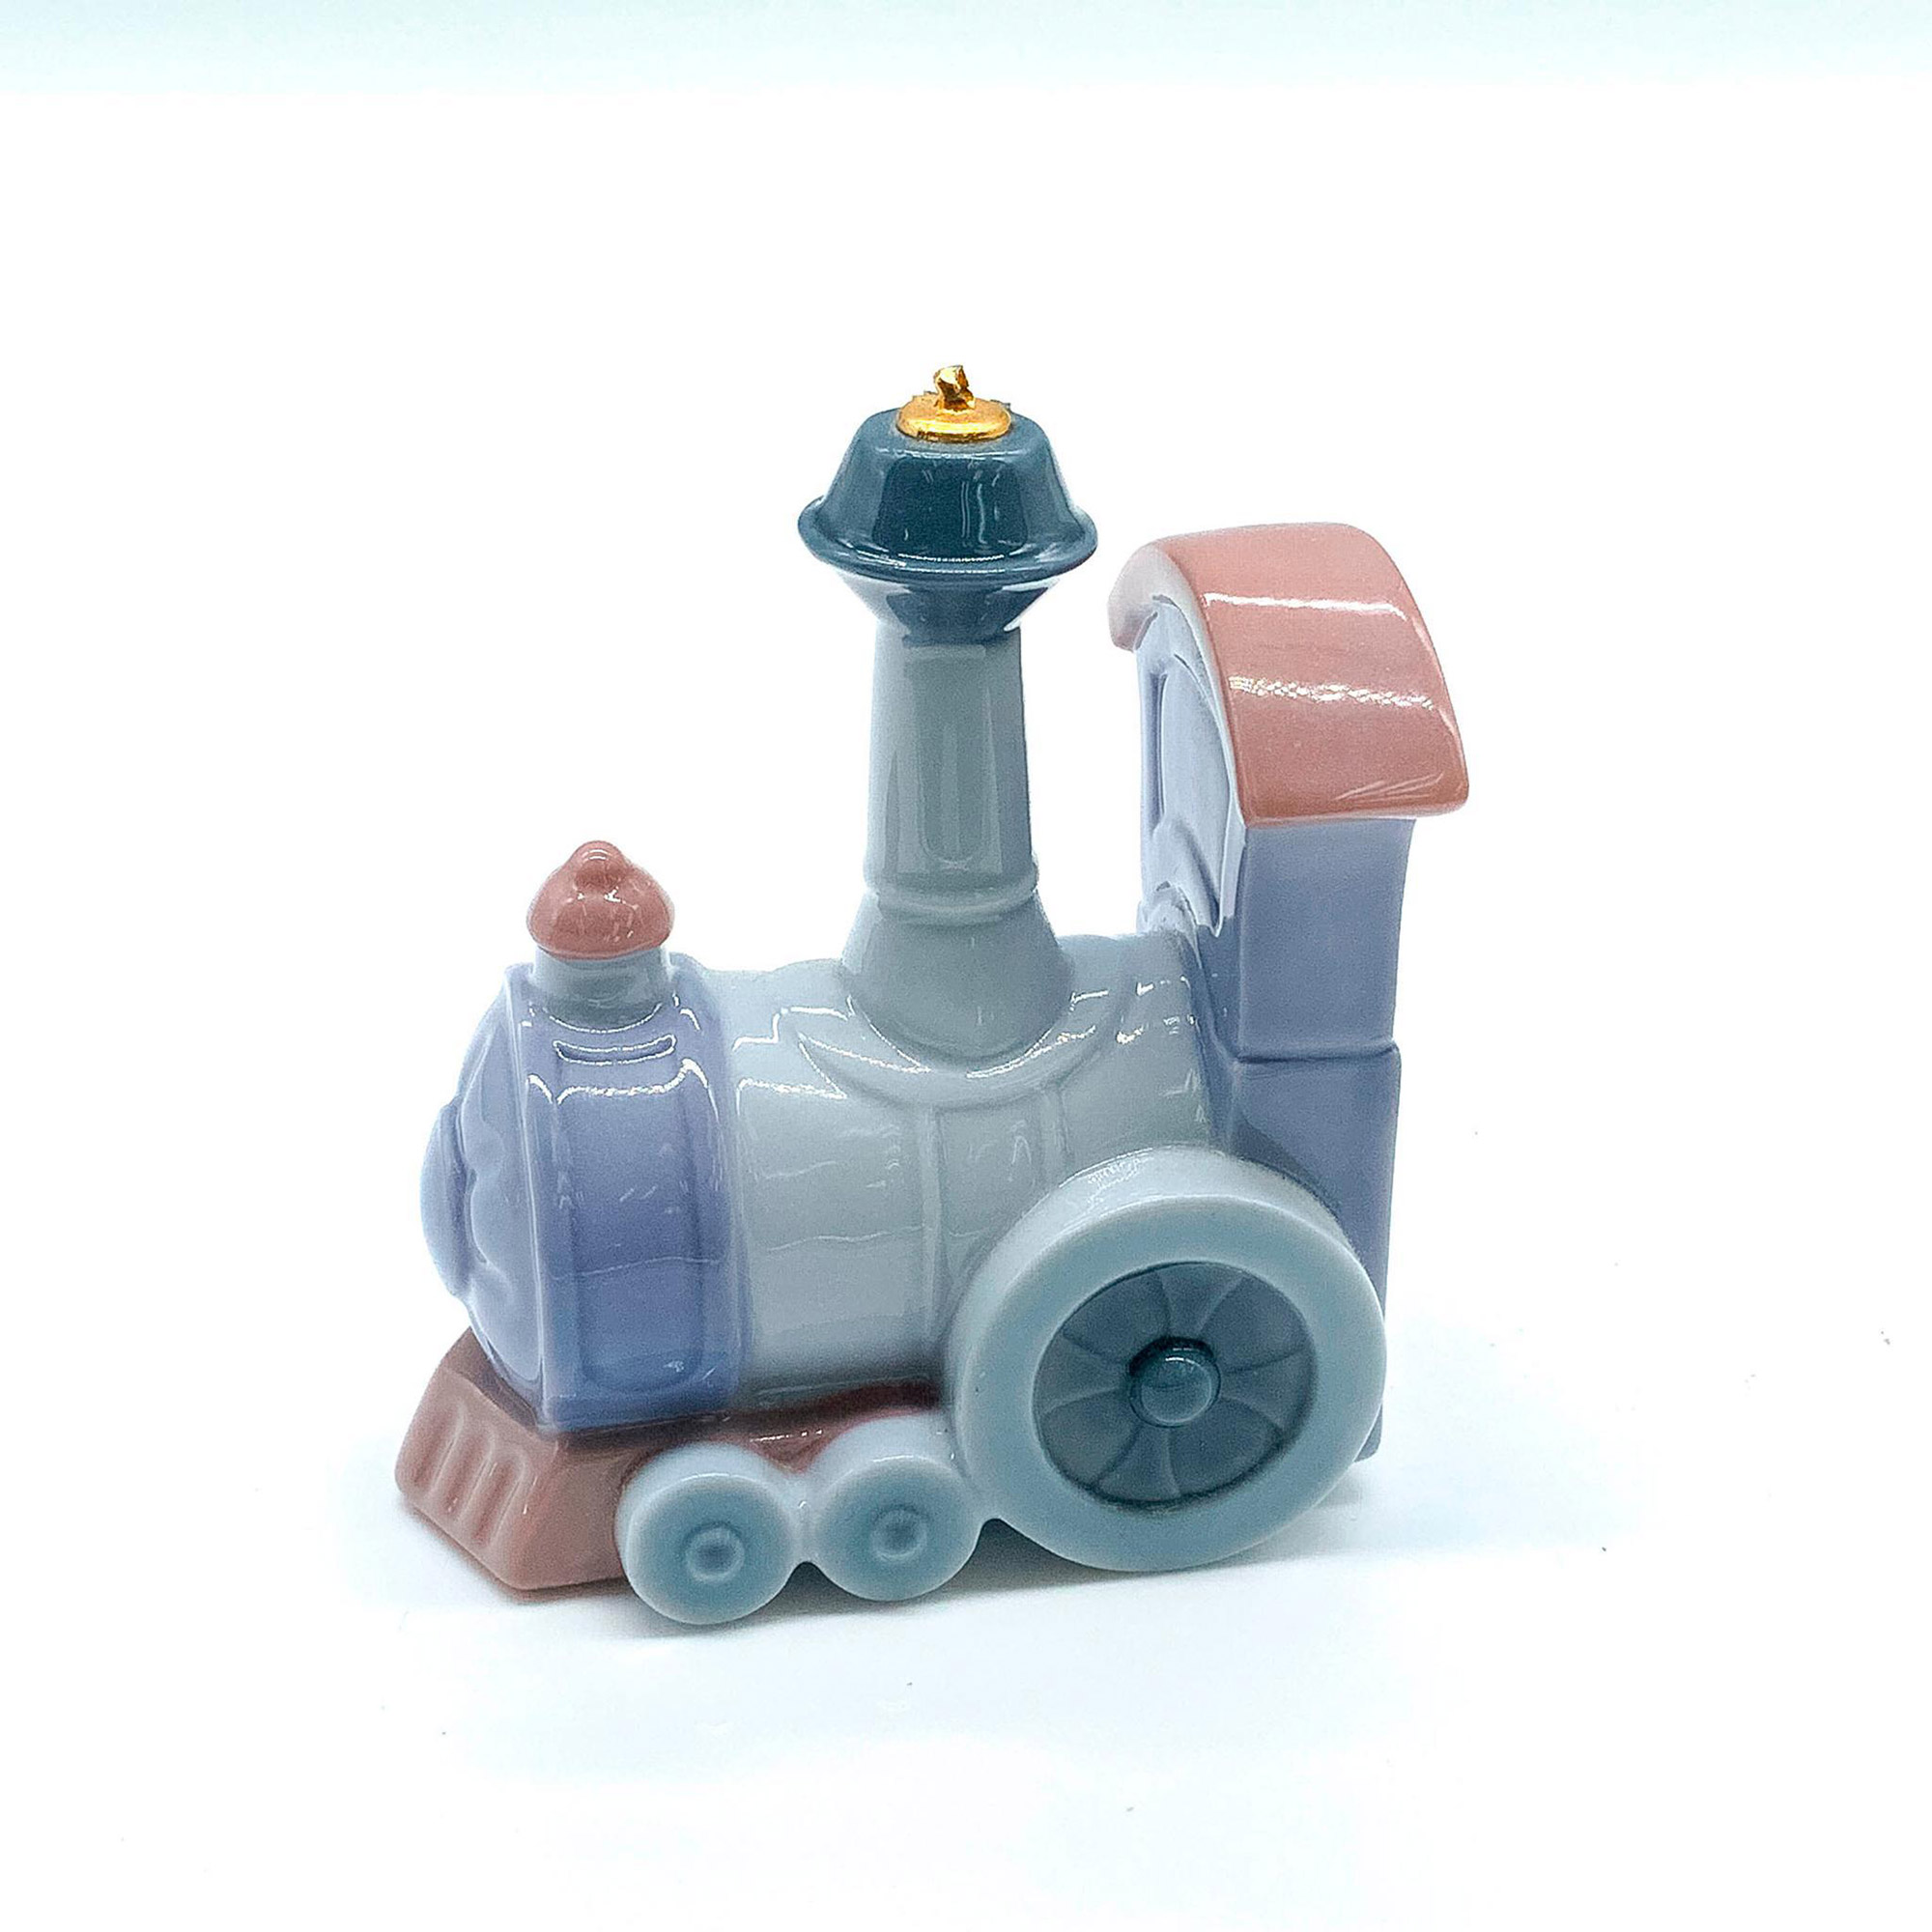 Train 1006264 - Lladro Porcelain Figurine - Image 2 of 4